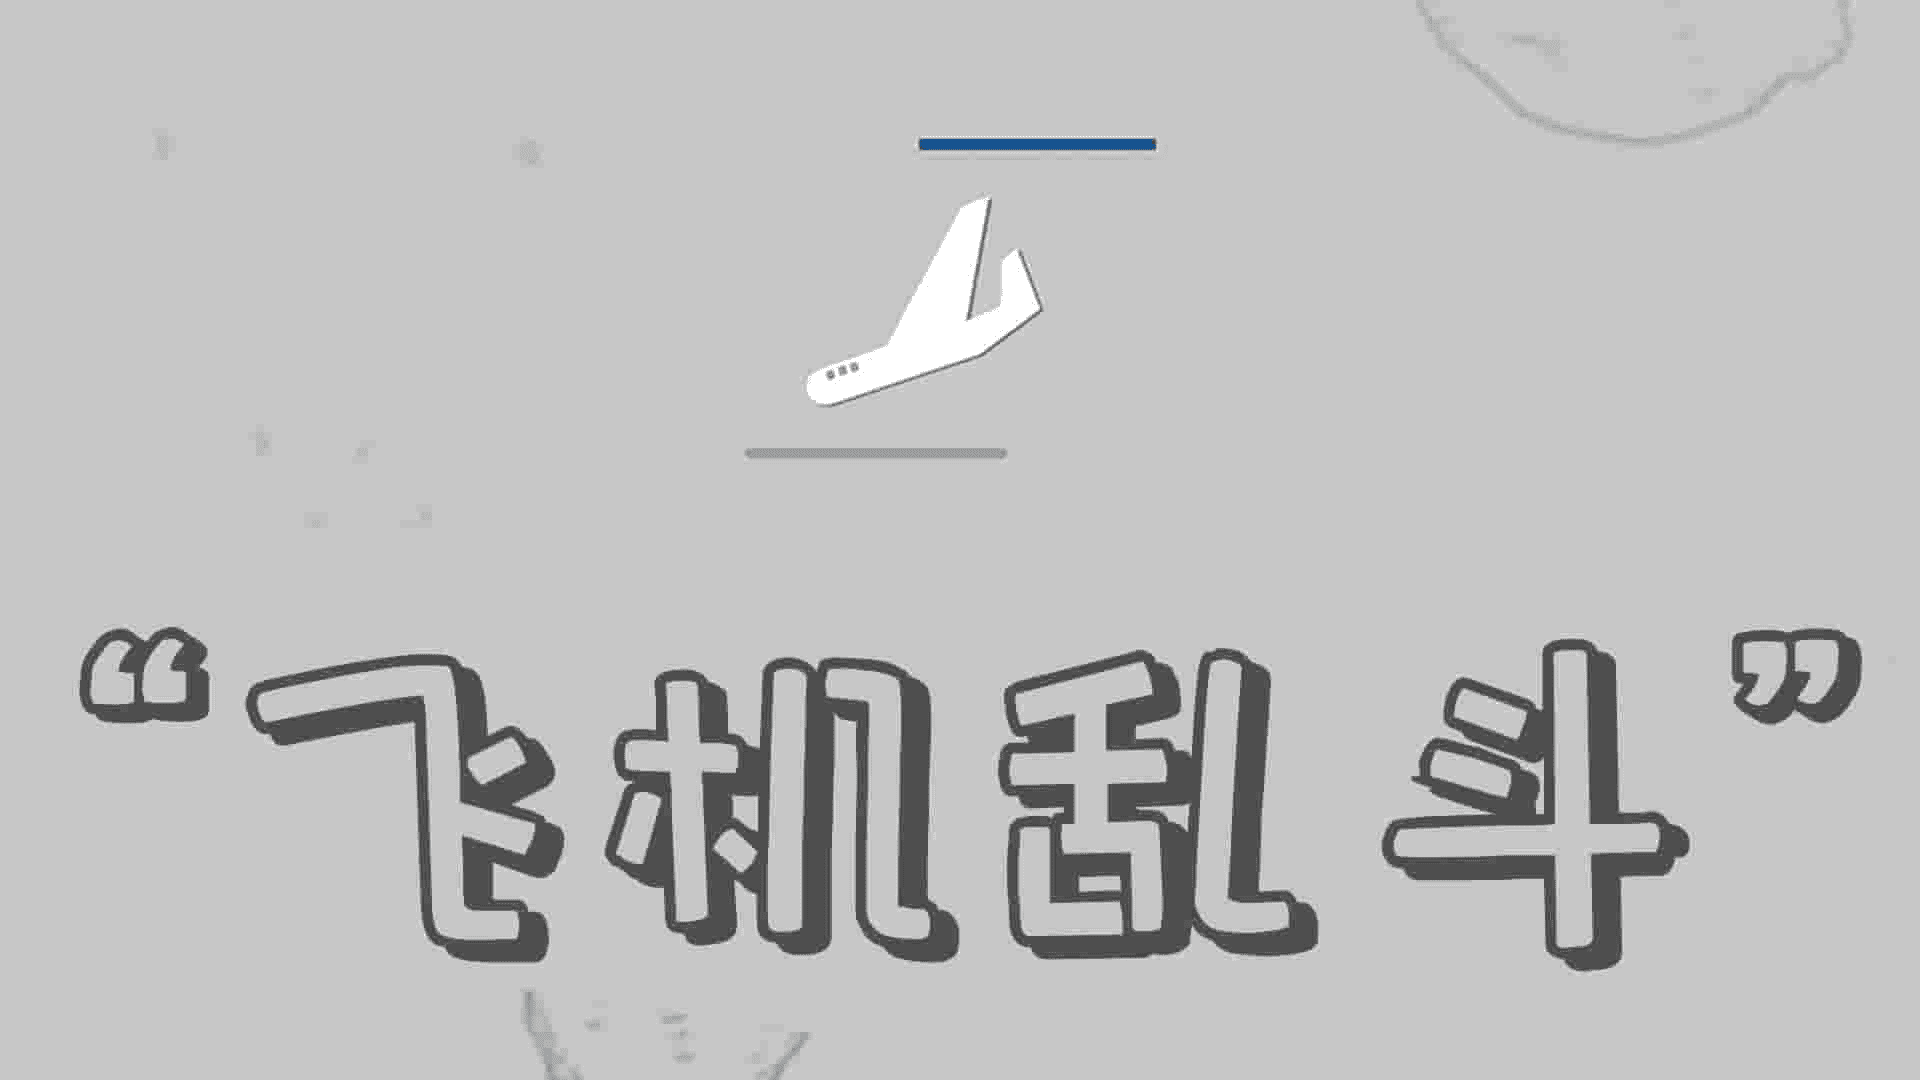 Banner of 飛行機乱闘 1.8